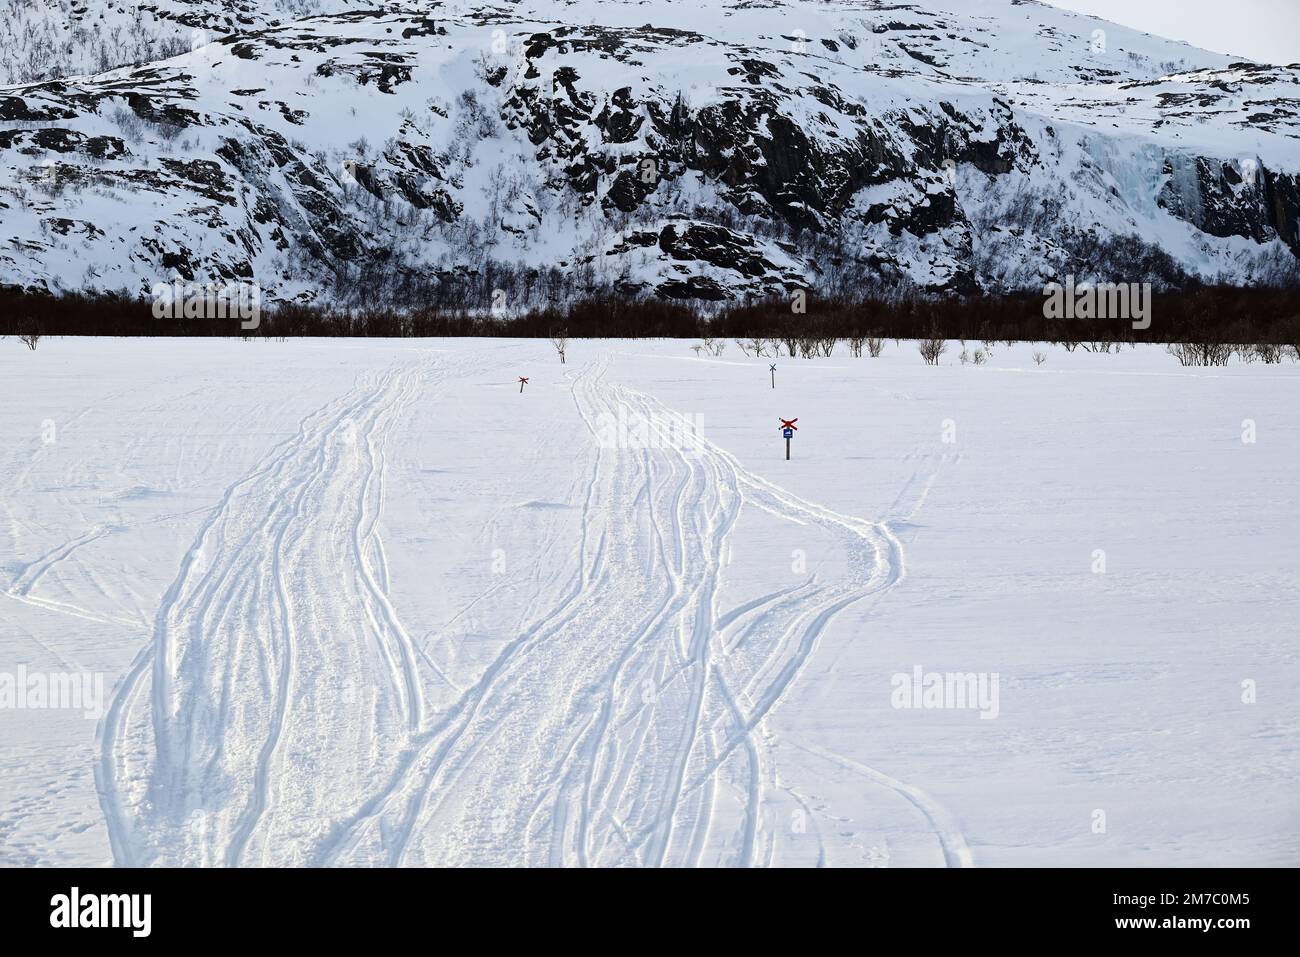 Gefrorener See und Schneeräumspuren in der Nähe des Dorfes Varangerbotn im fernen Norden Norwegens. Stockfoto